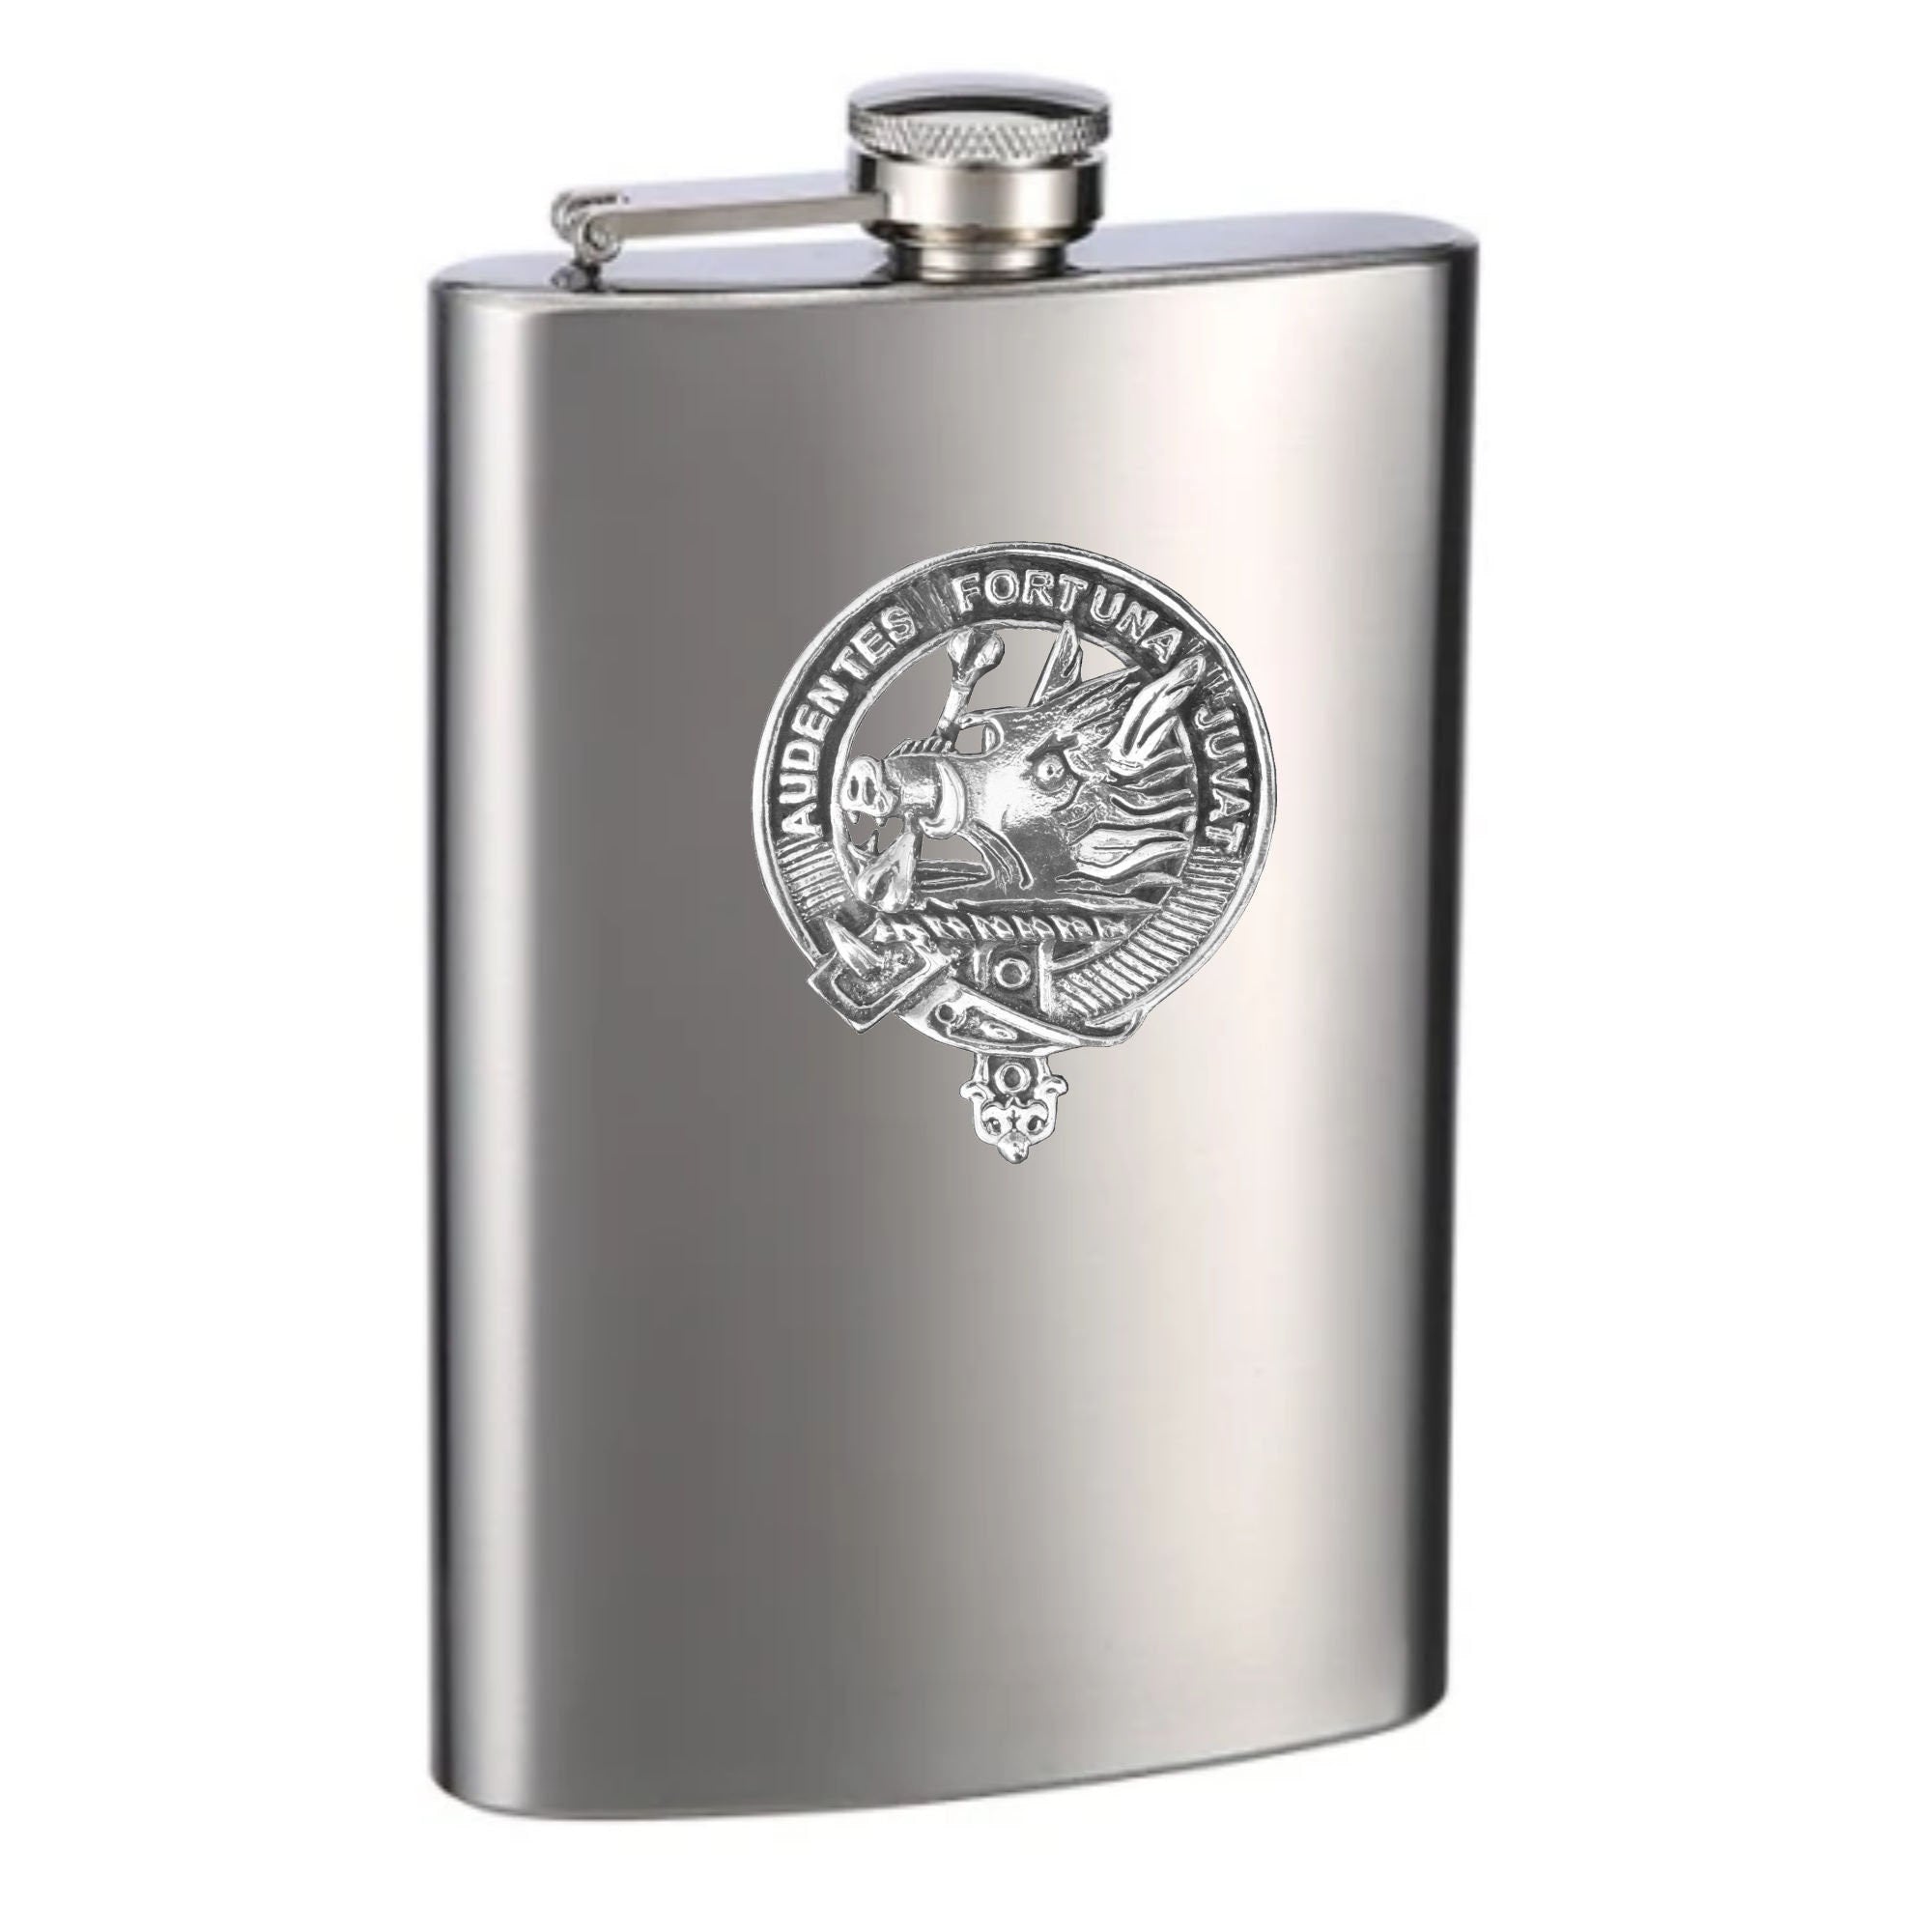 MacKinnon 8oz Clan Crest Scottish Badge Stainless Steel Flask